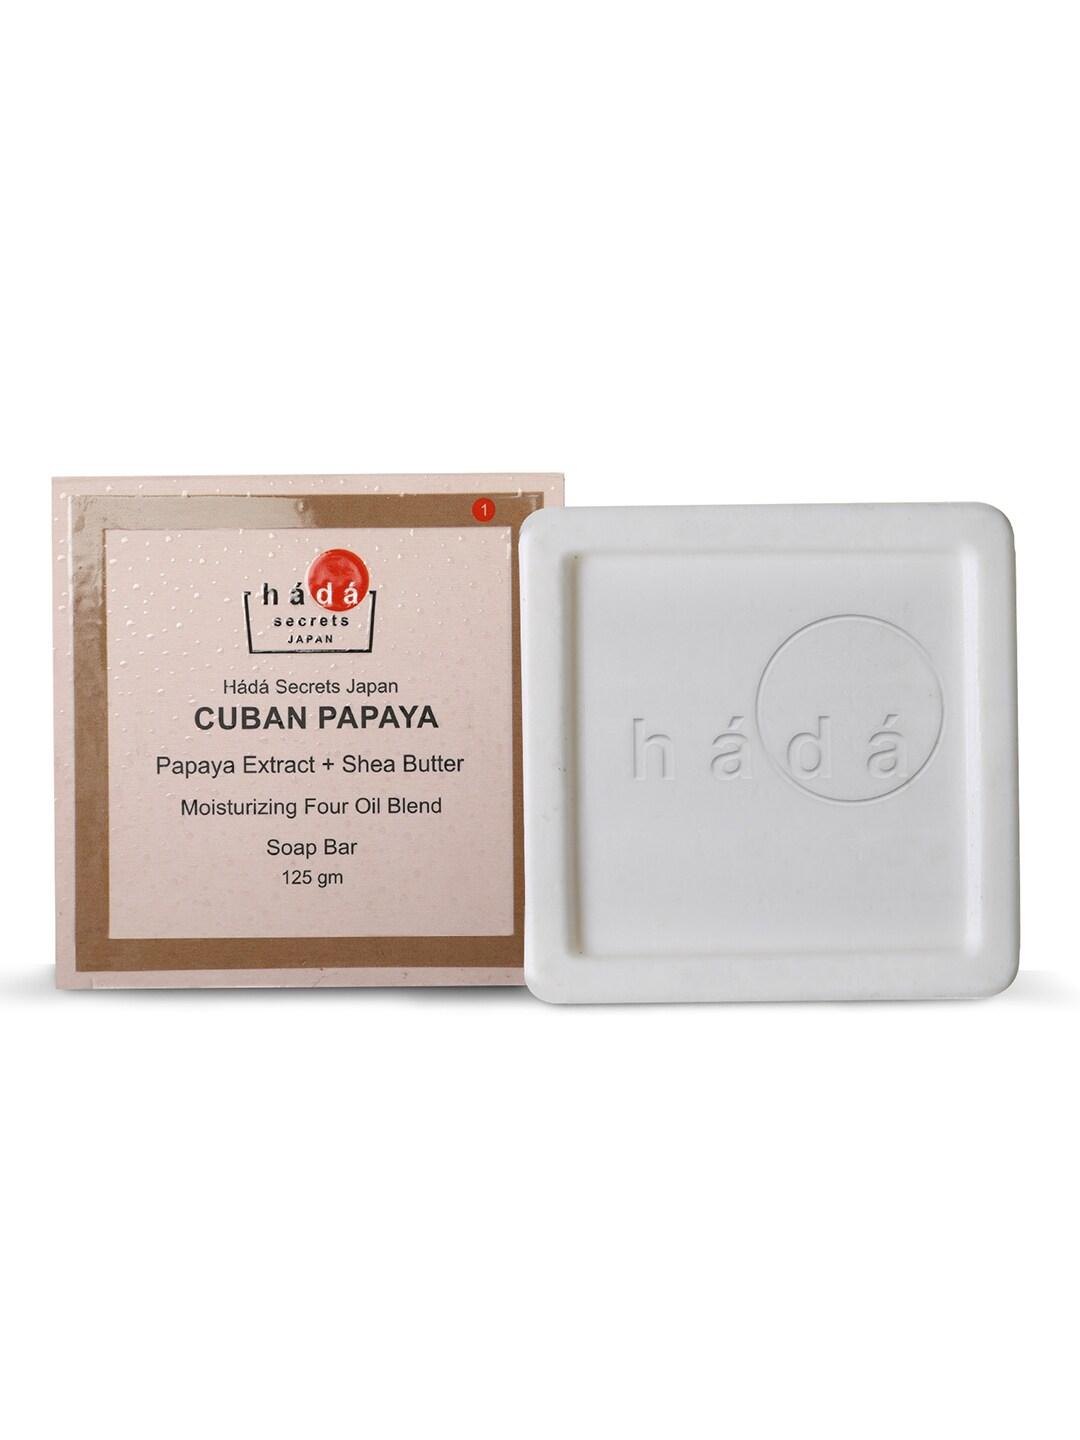 Hada Secrets Japan Cuban Papaya Soap bar with Papaya Extract 125 g